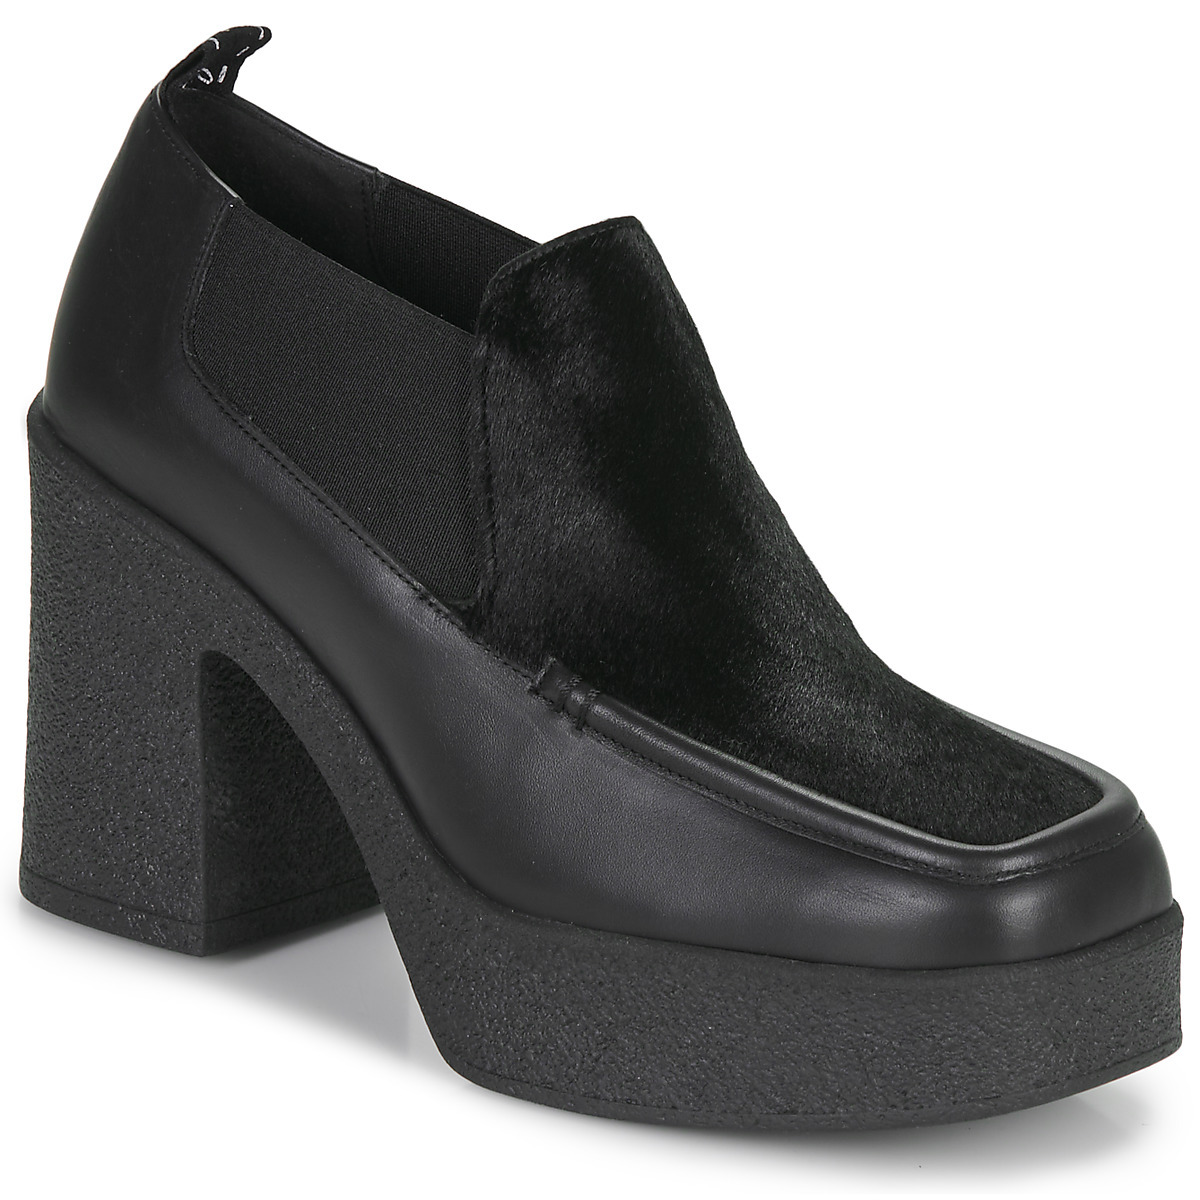 Spartoo - Ankle Boots Black - Castaner Women GOOFASH